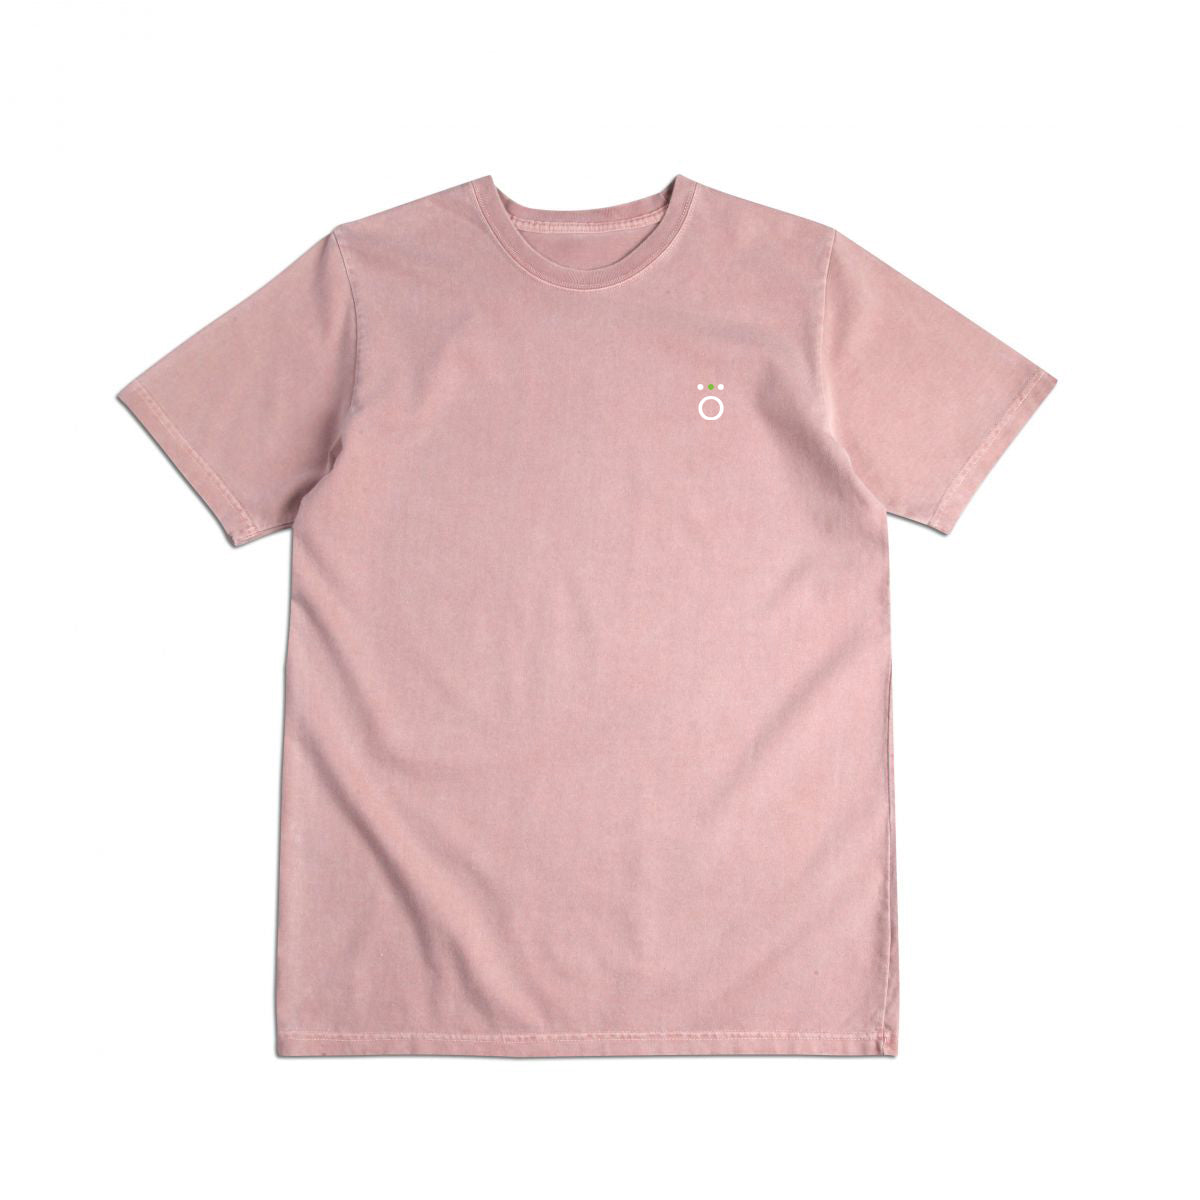 Soren Umlaut T-Shirt - Dusty Rose